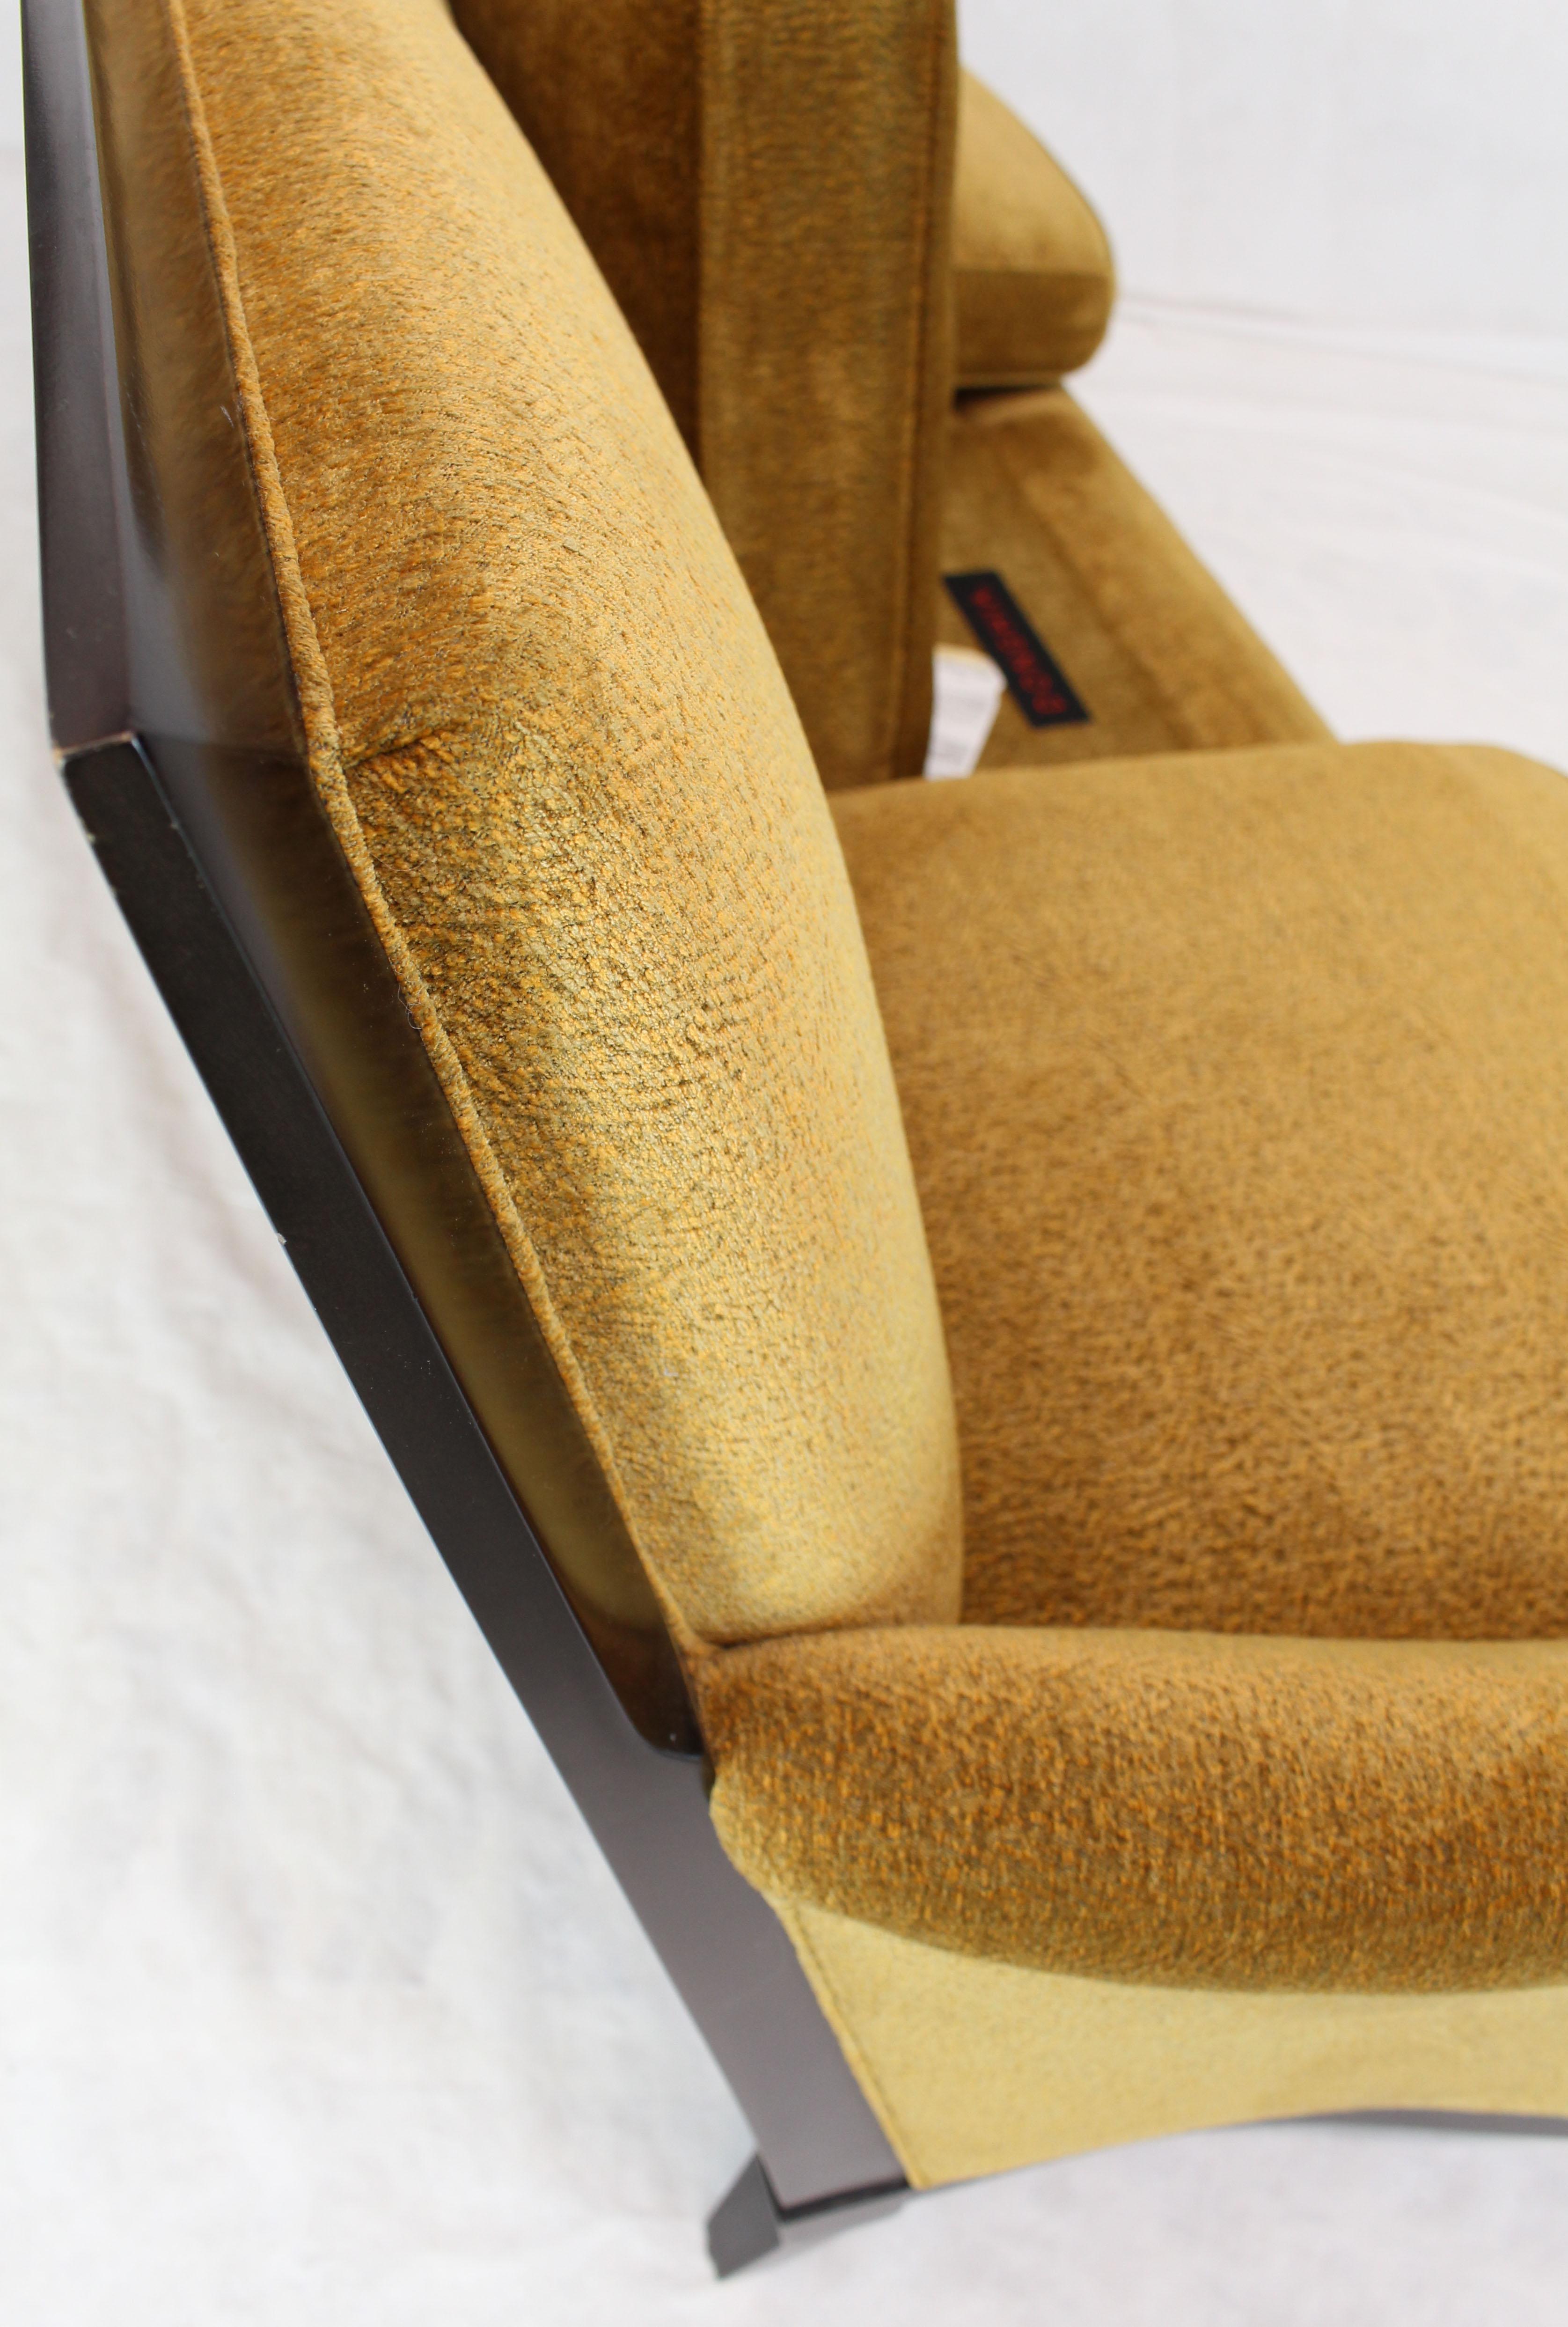 Dinghy Modern Luxury Sofa Chenille Upholstery Dark Chocolate Frame Finish For Sale 3